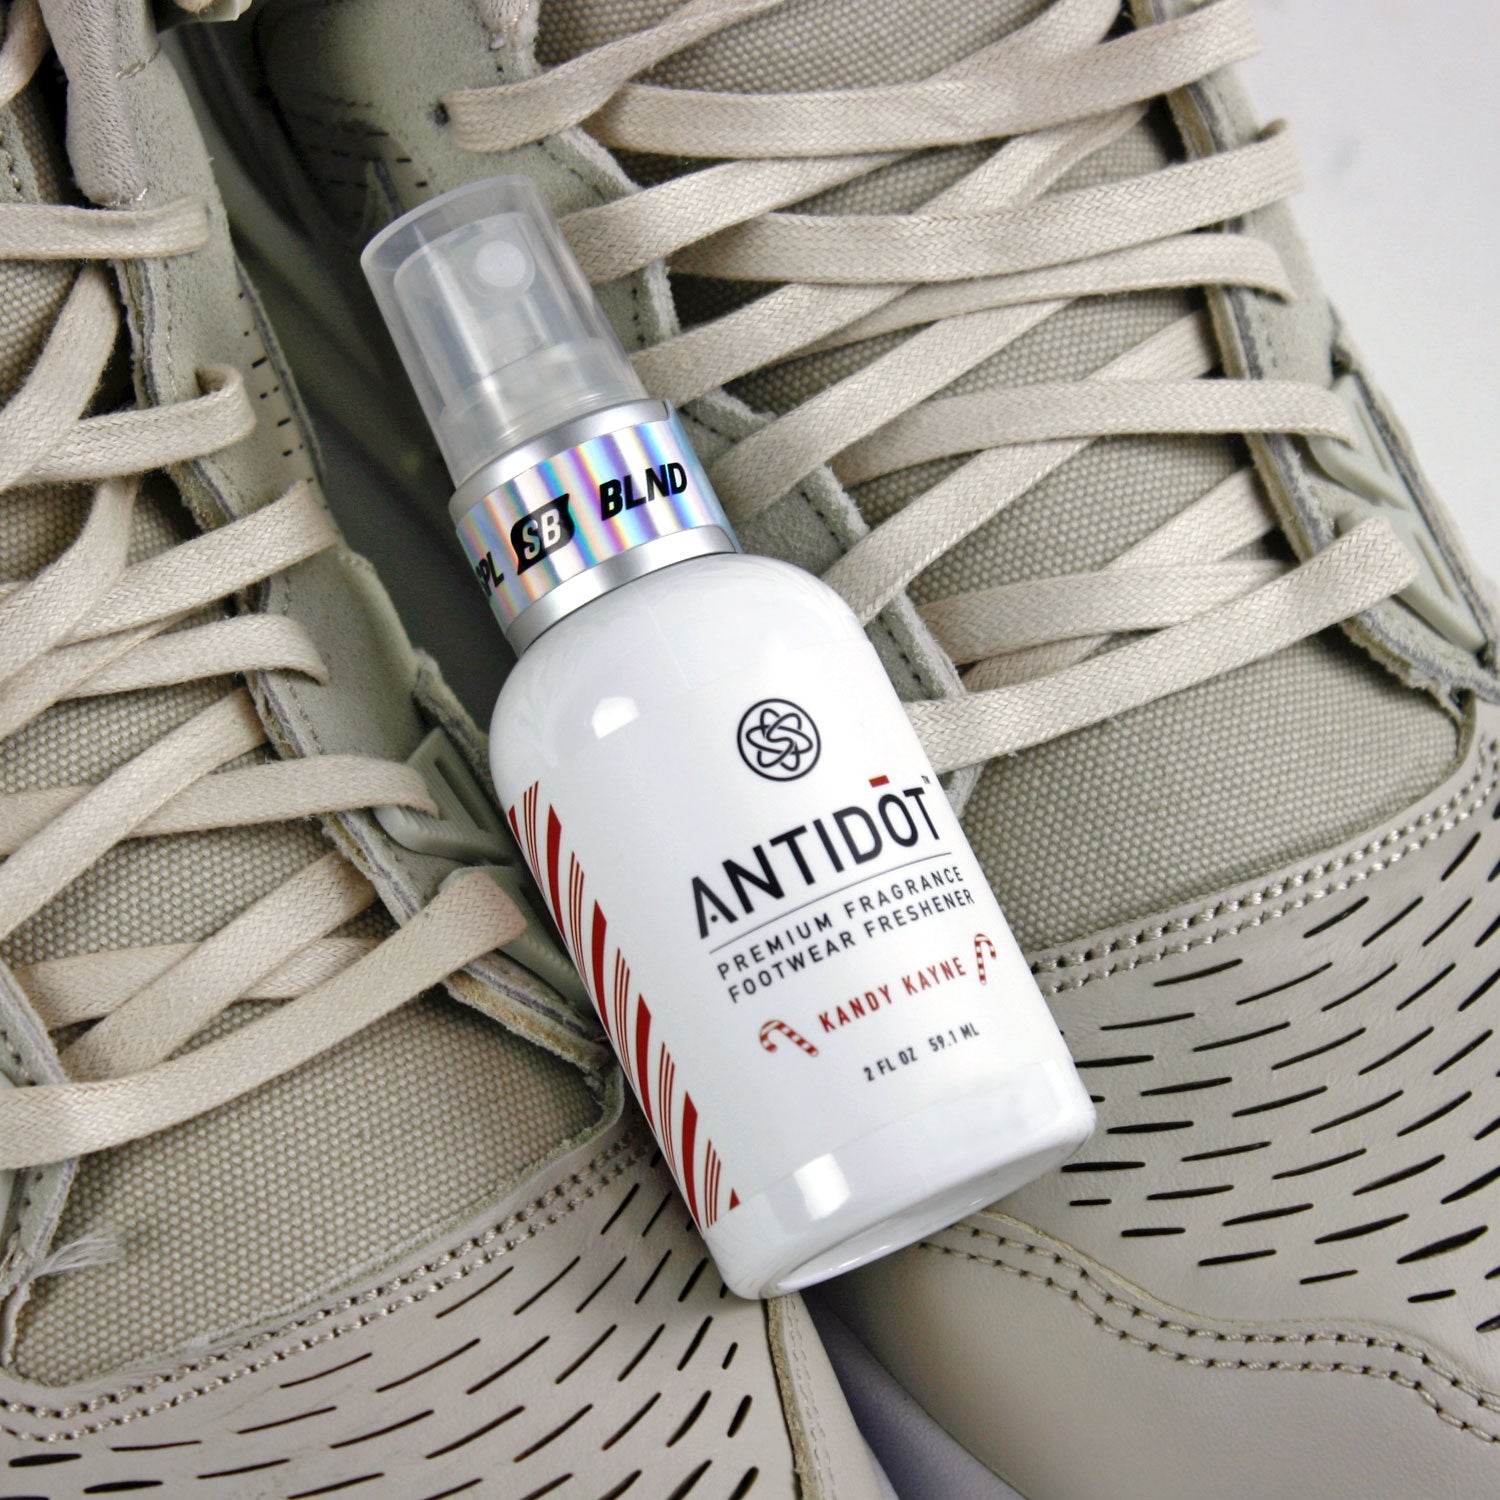 ANTIDŌT® - Kandy Kayne SB - solscience®  Sneaker Deodorizer Spray